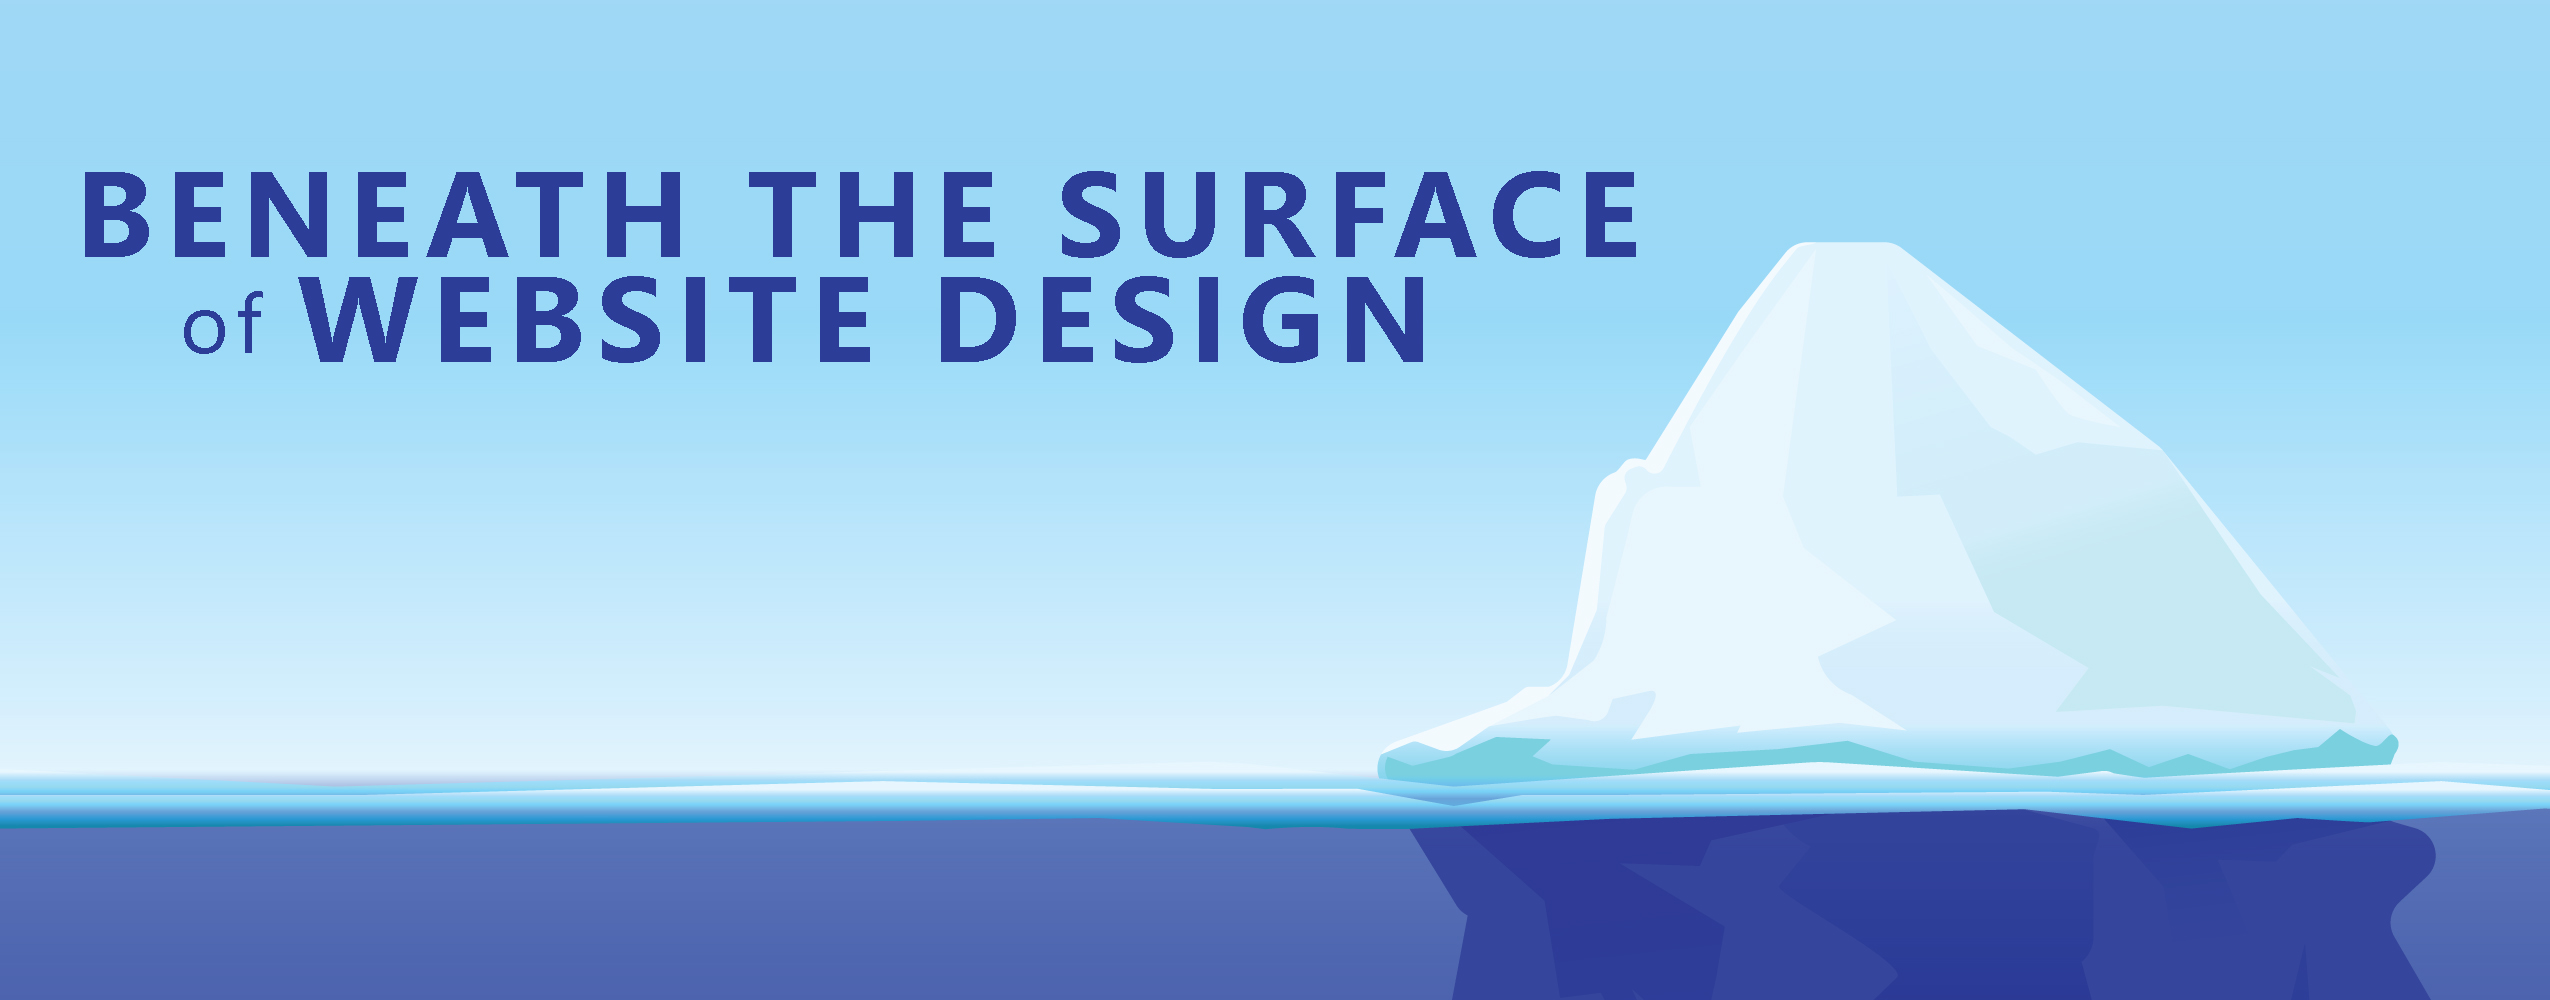 website design below the surface